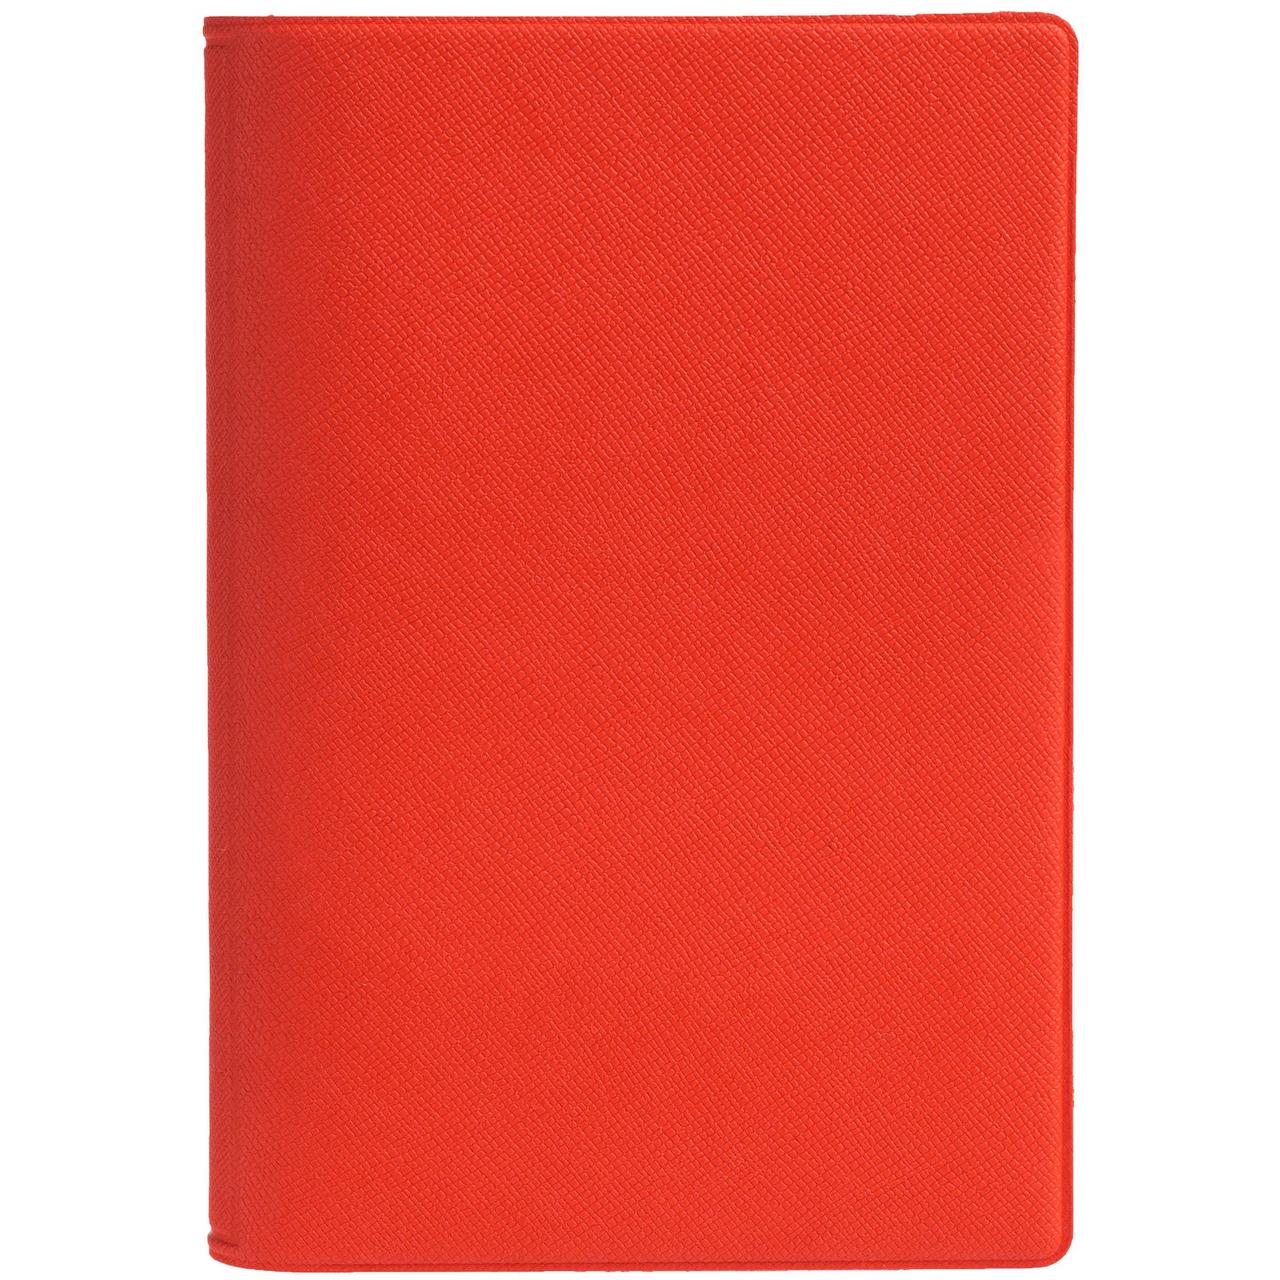 Обложка для паспорта Devon, красная (артикул 10266.50)